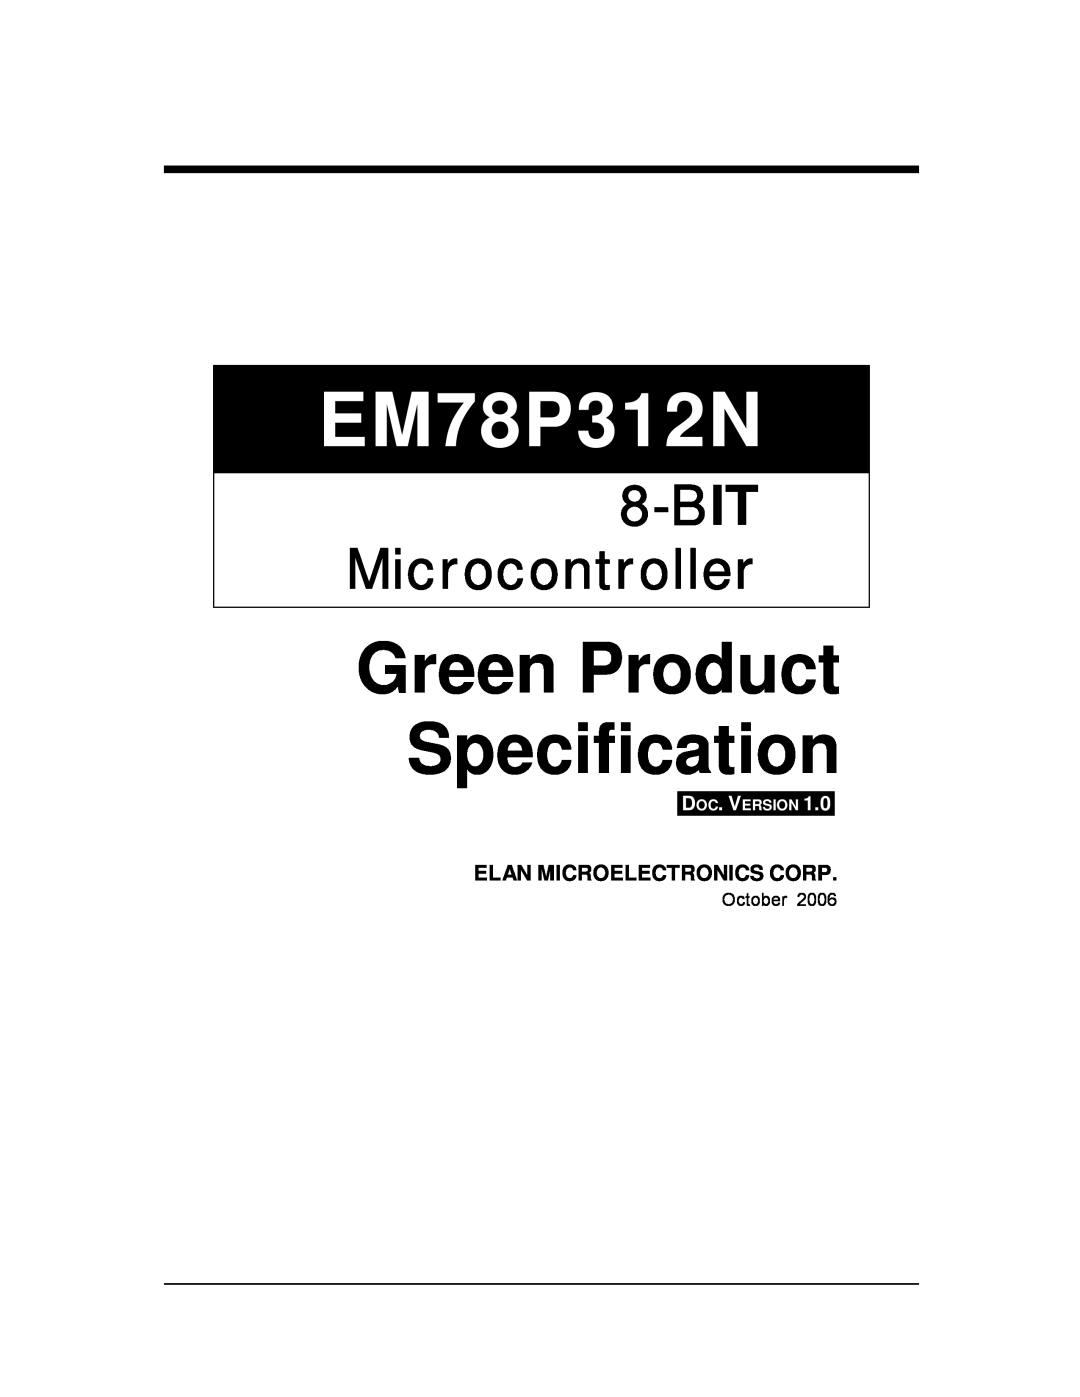 IBM EM78P312N manual Green Product Specification, BIT Microcontroller, Elan Microelectronics Corp, October 